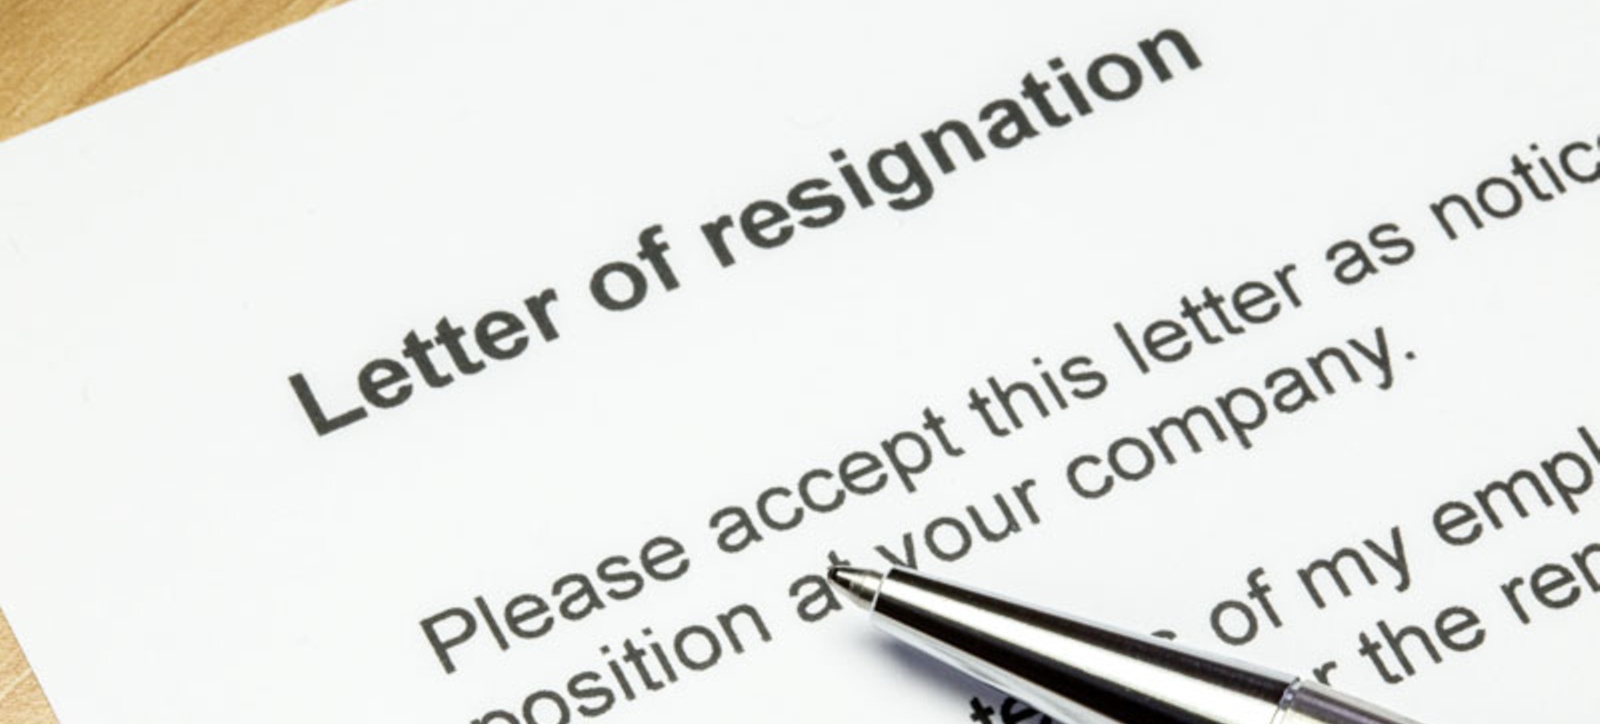 An employee's resignation letter